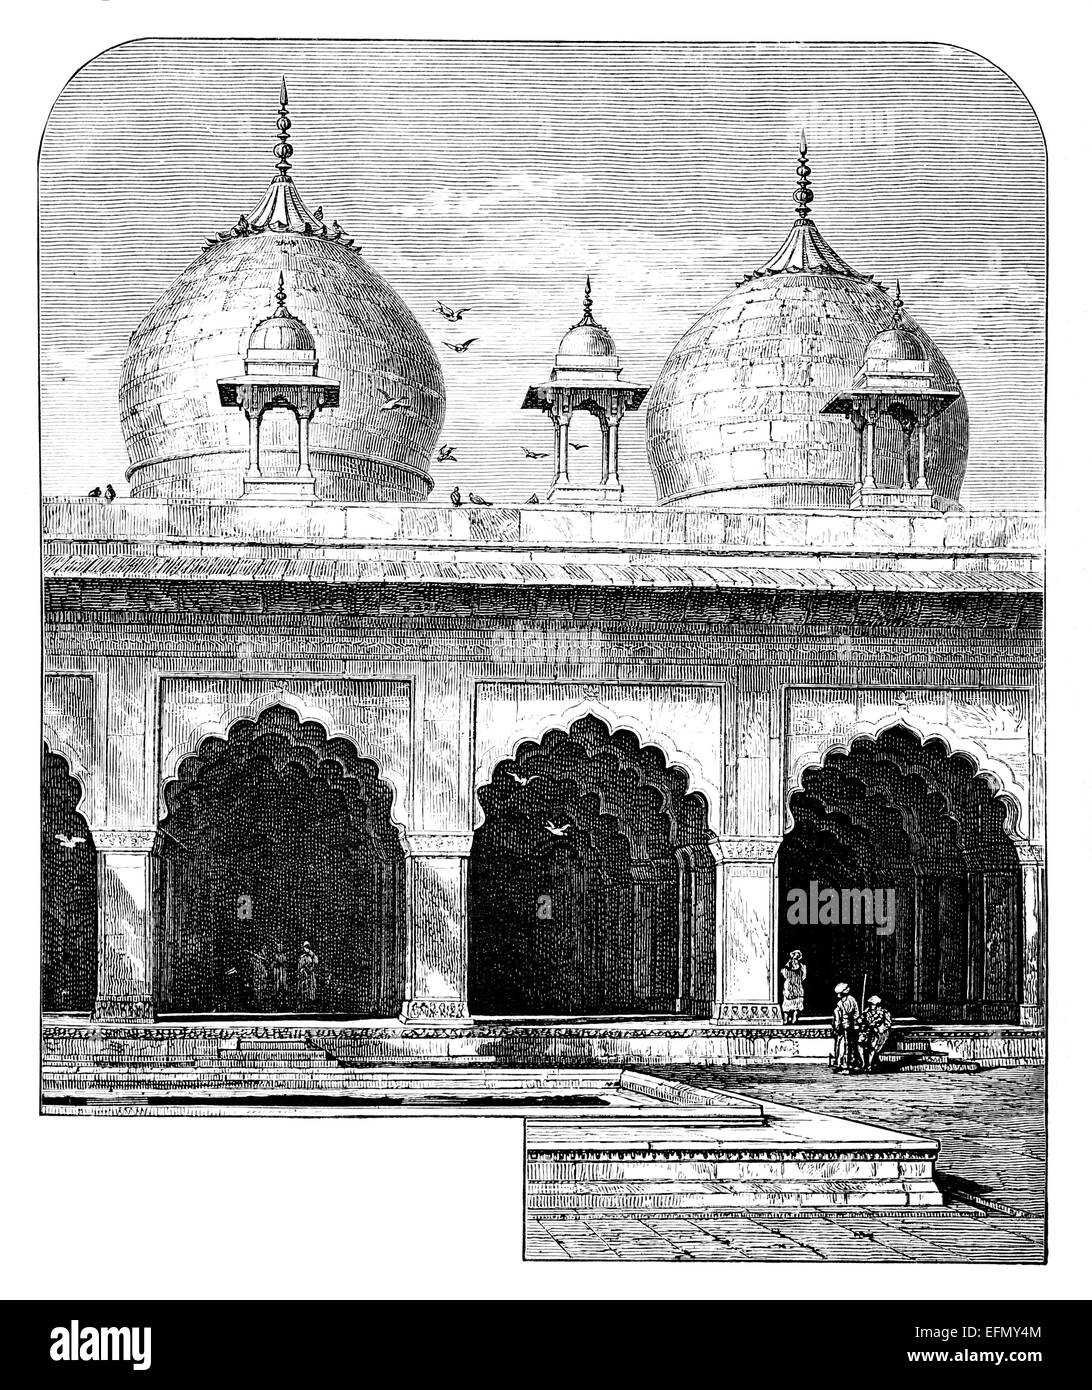 Agra Fort Images - Free Download on Freepik